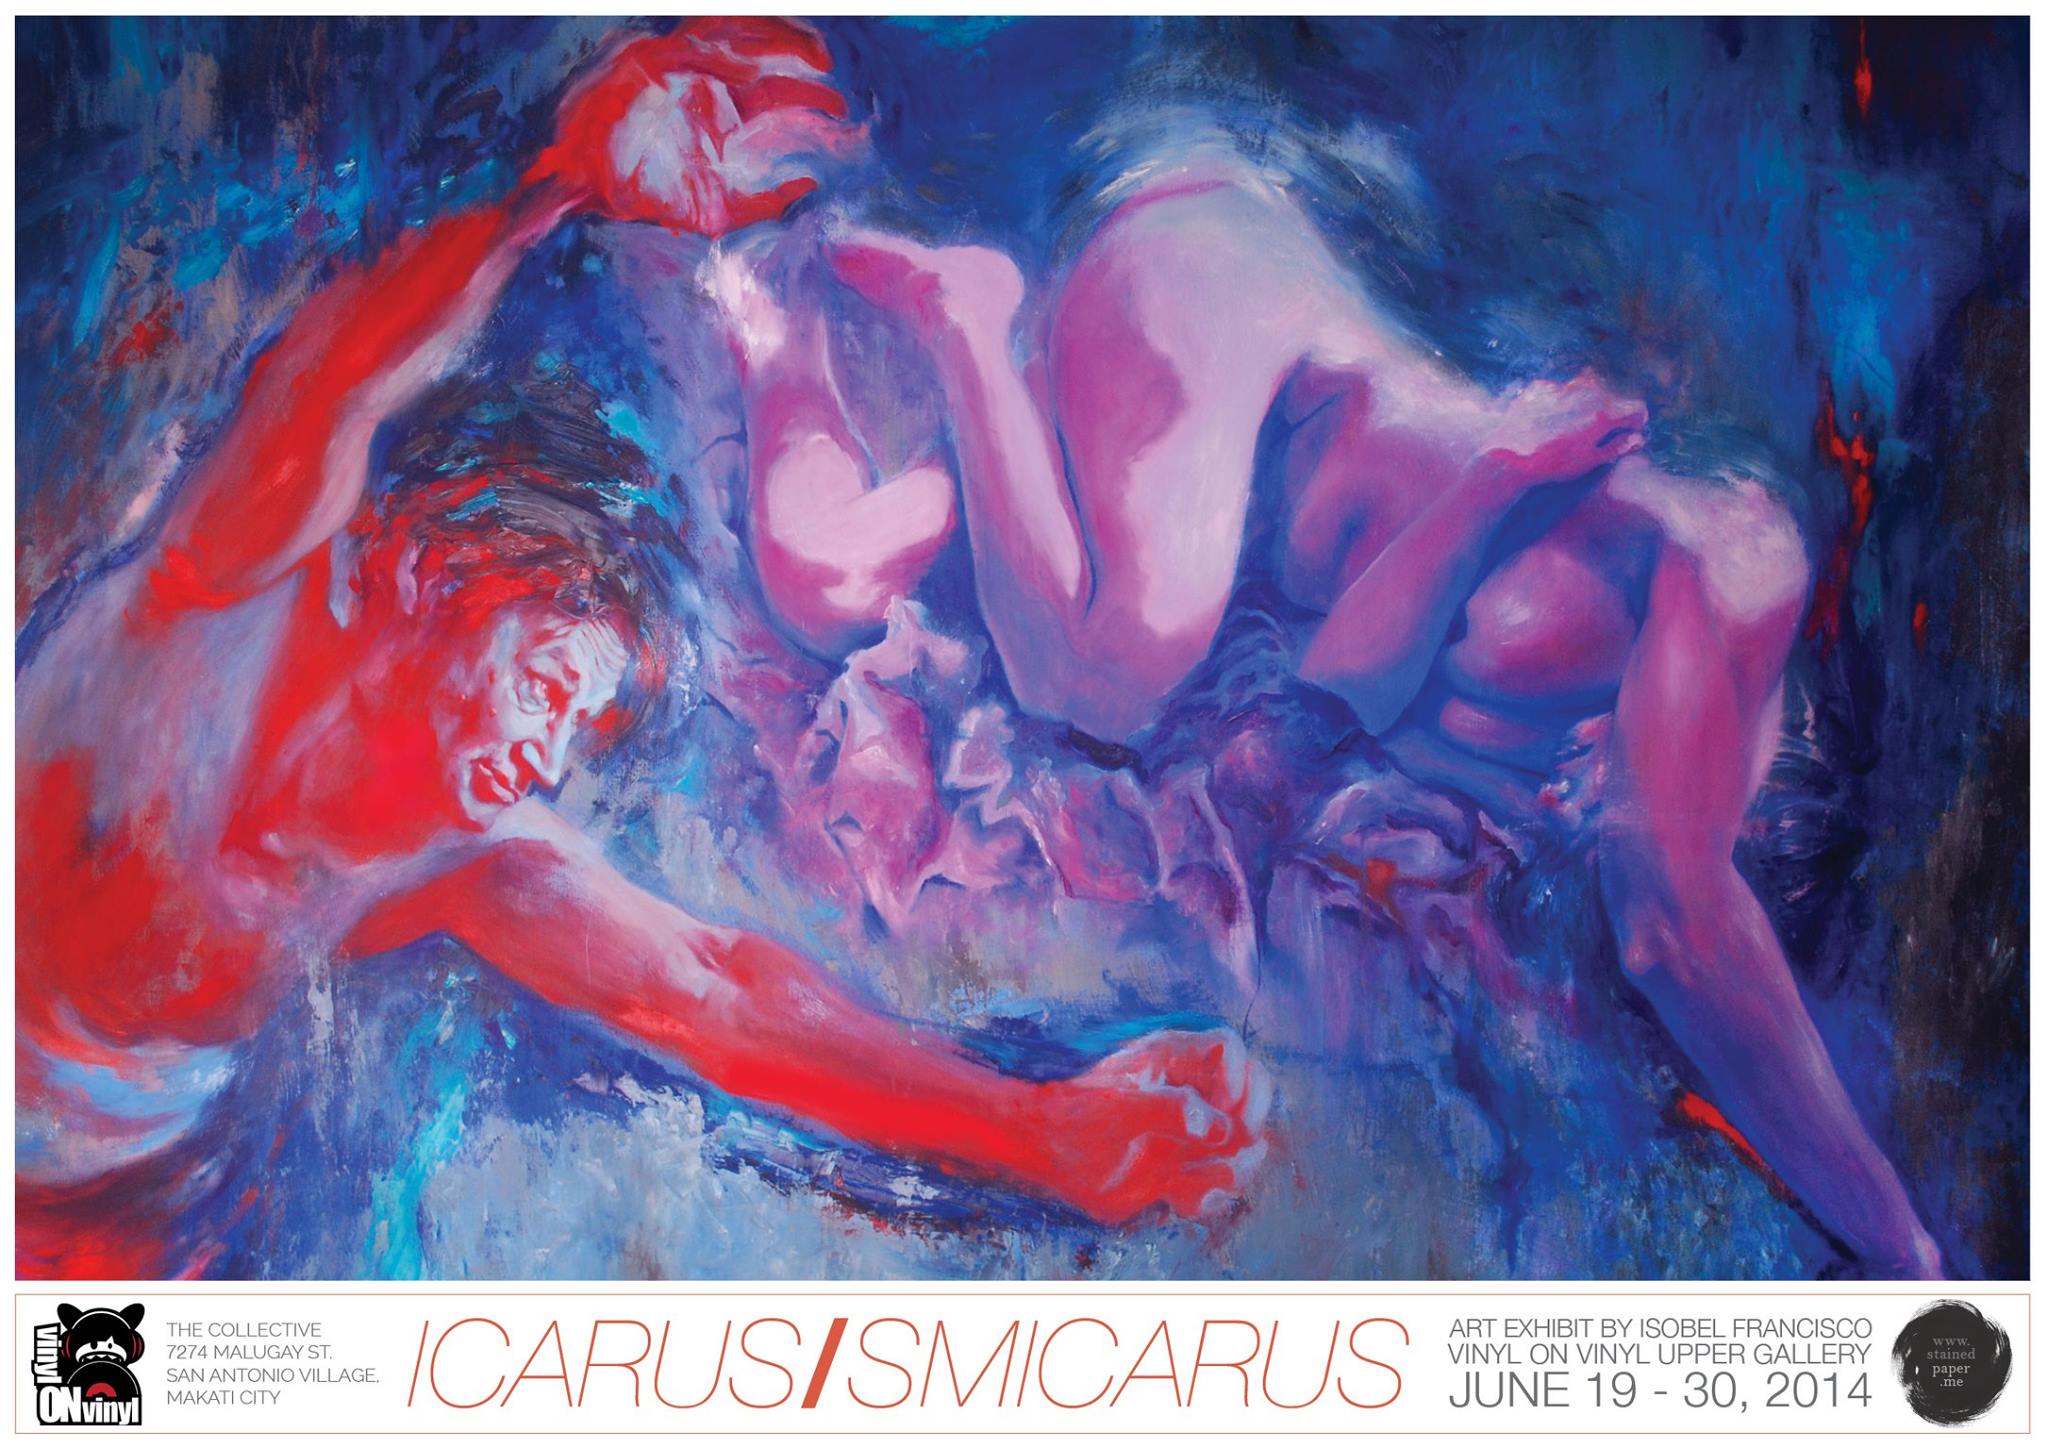 Icarus Smicarus